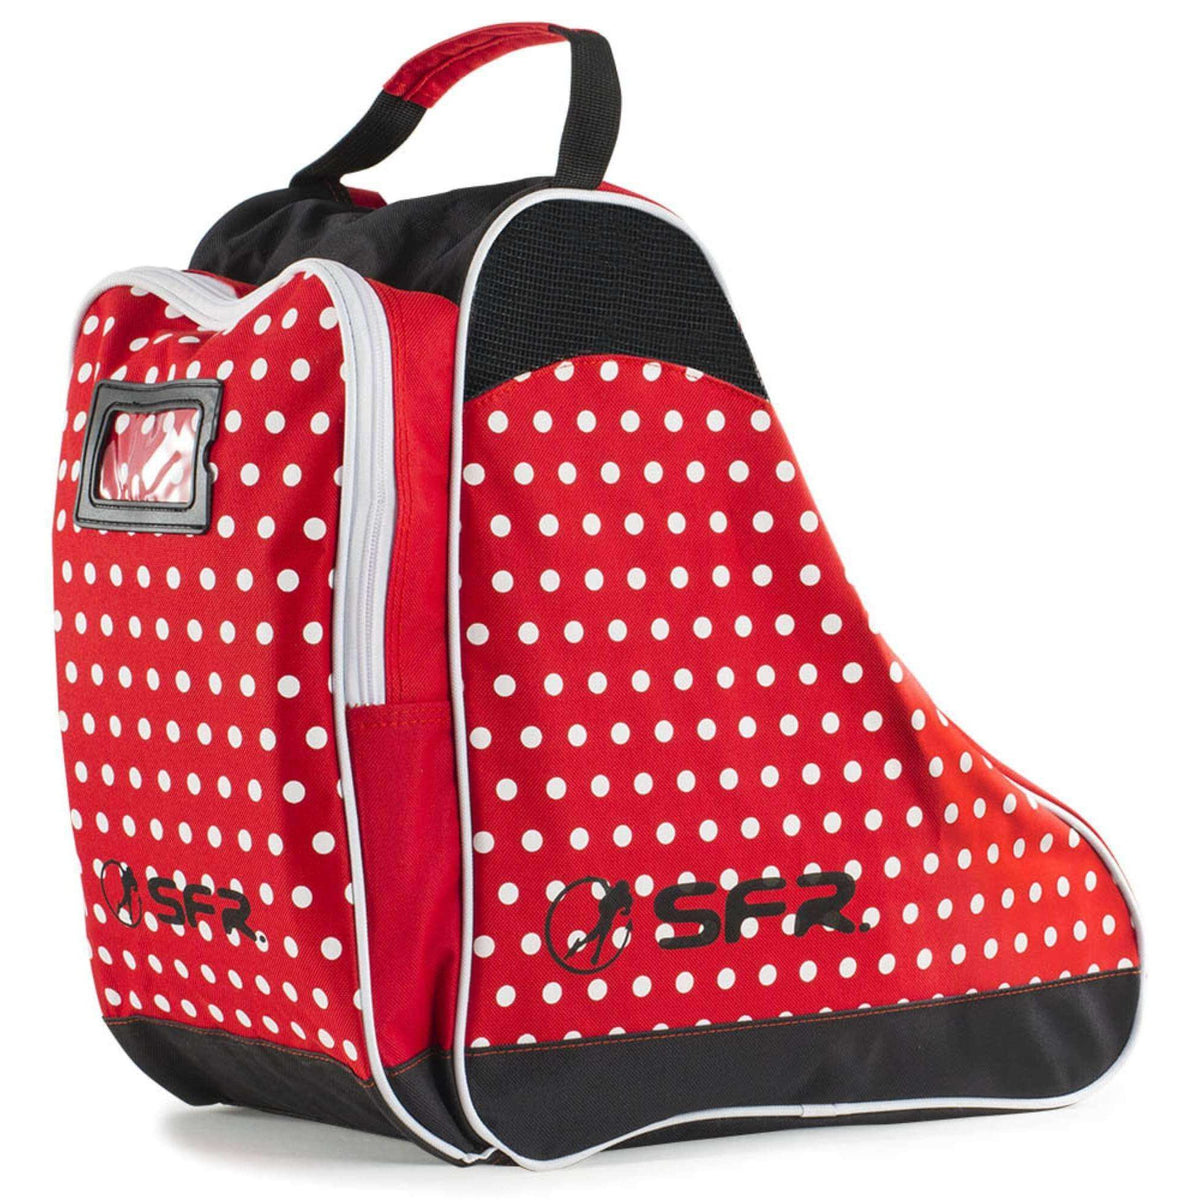 SFR Ice & Skate Carry Bag Red - Red Polka